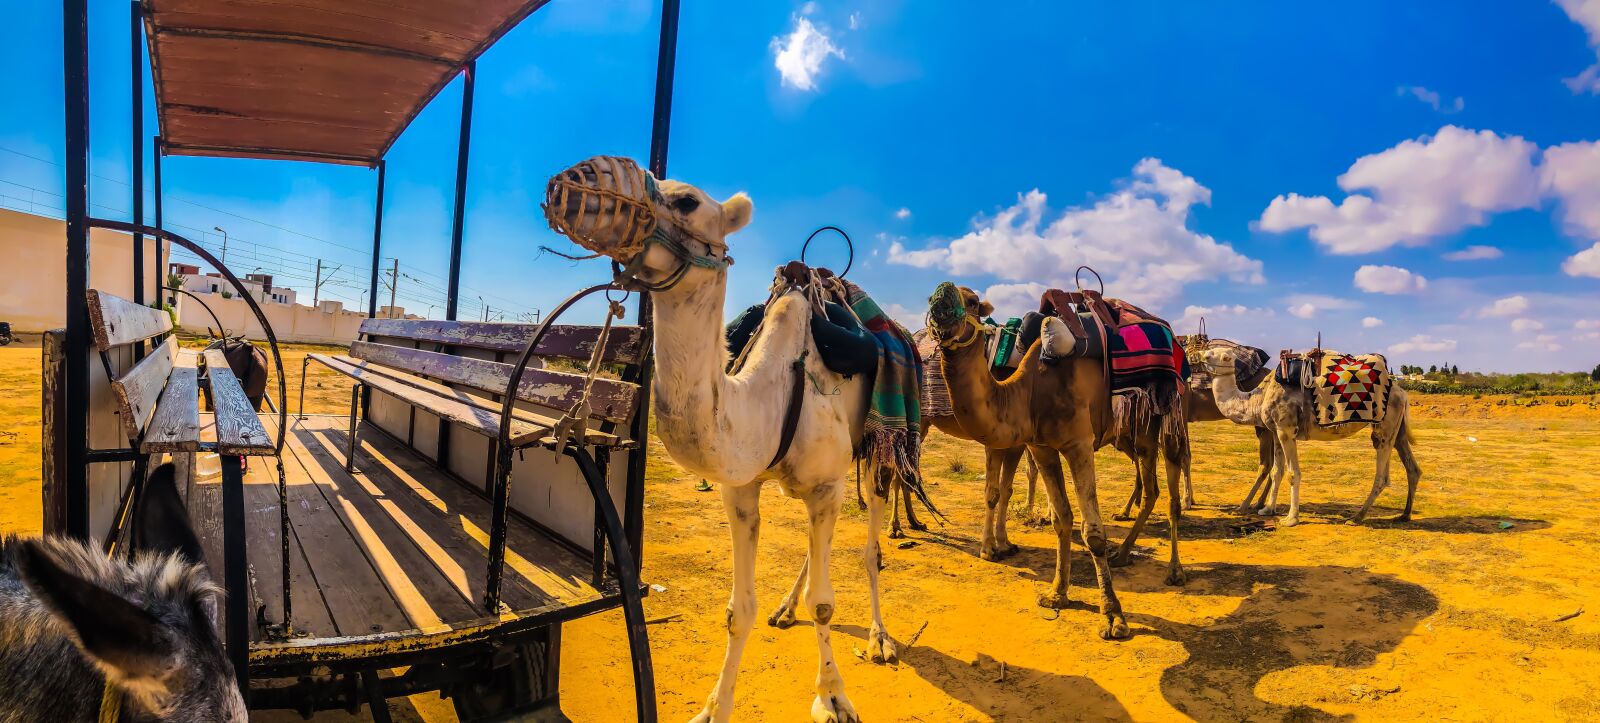 iPhone X back camera 4mm f/1.8 sample photo. Camel, desert, travel photography